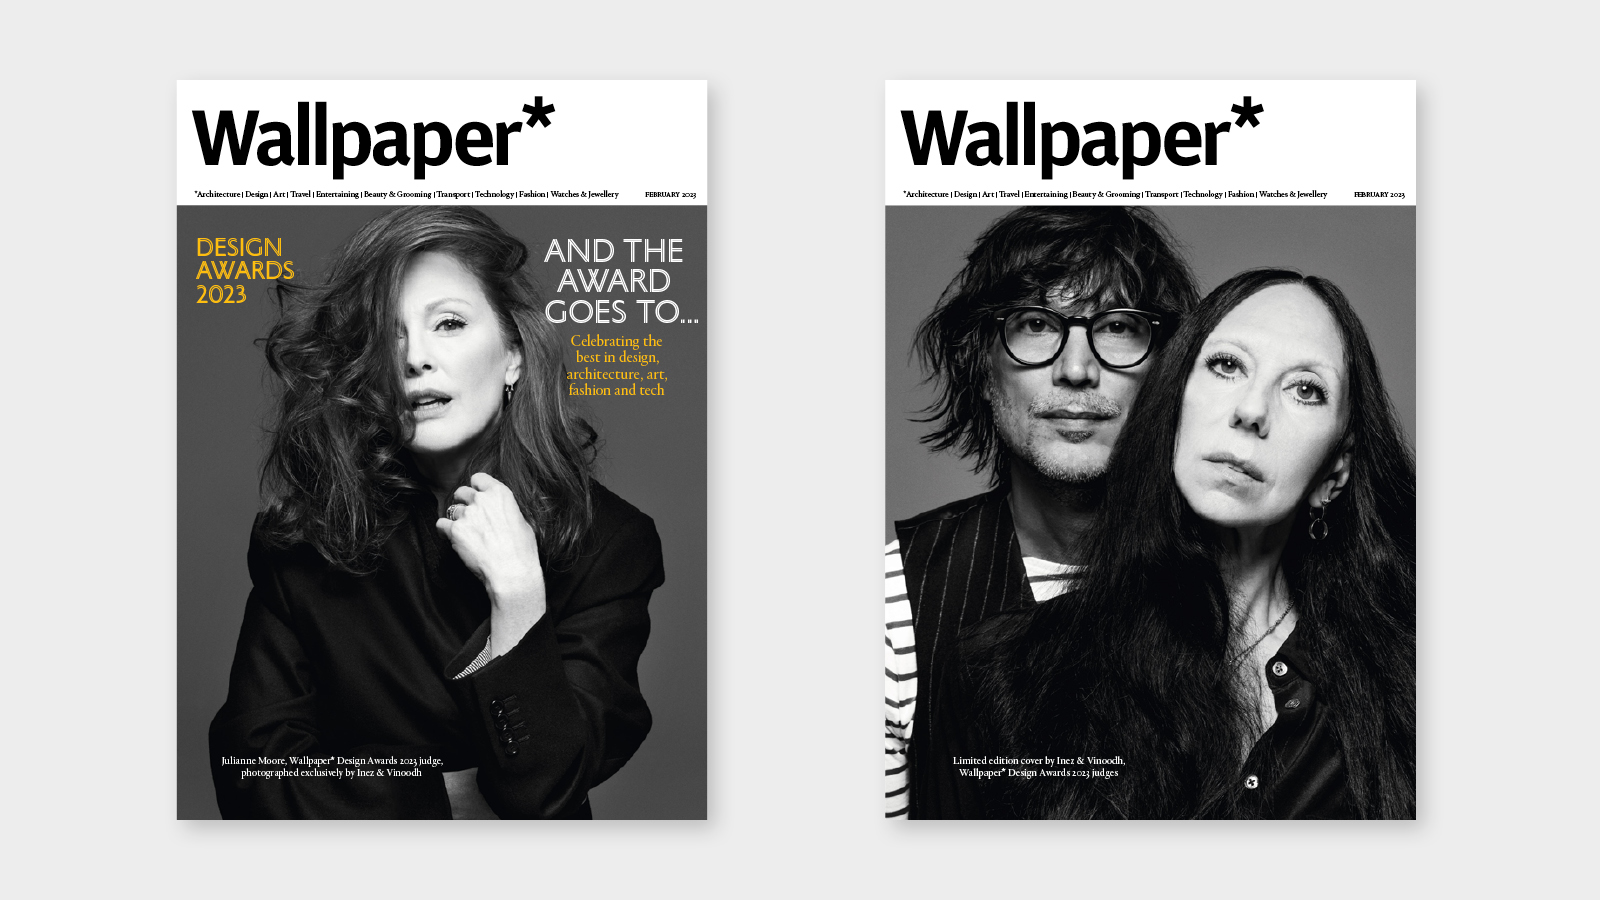 Wallpaper* Design Awards 2023 winners announced | Wallpaper